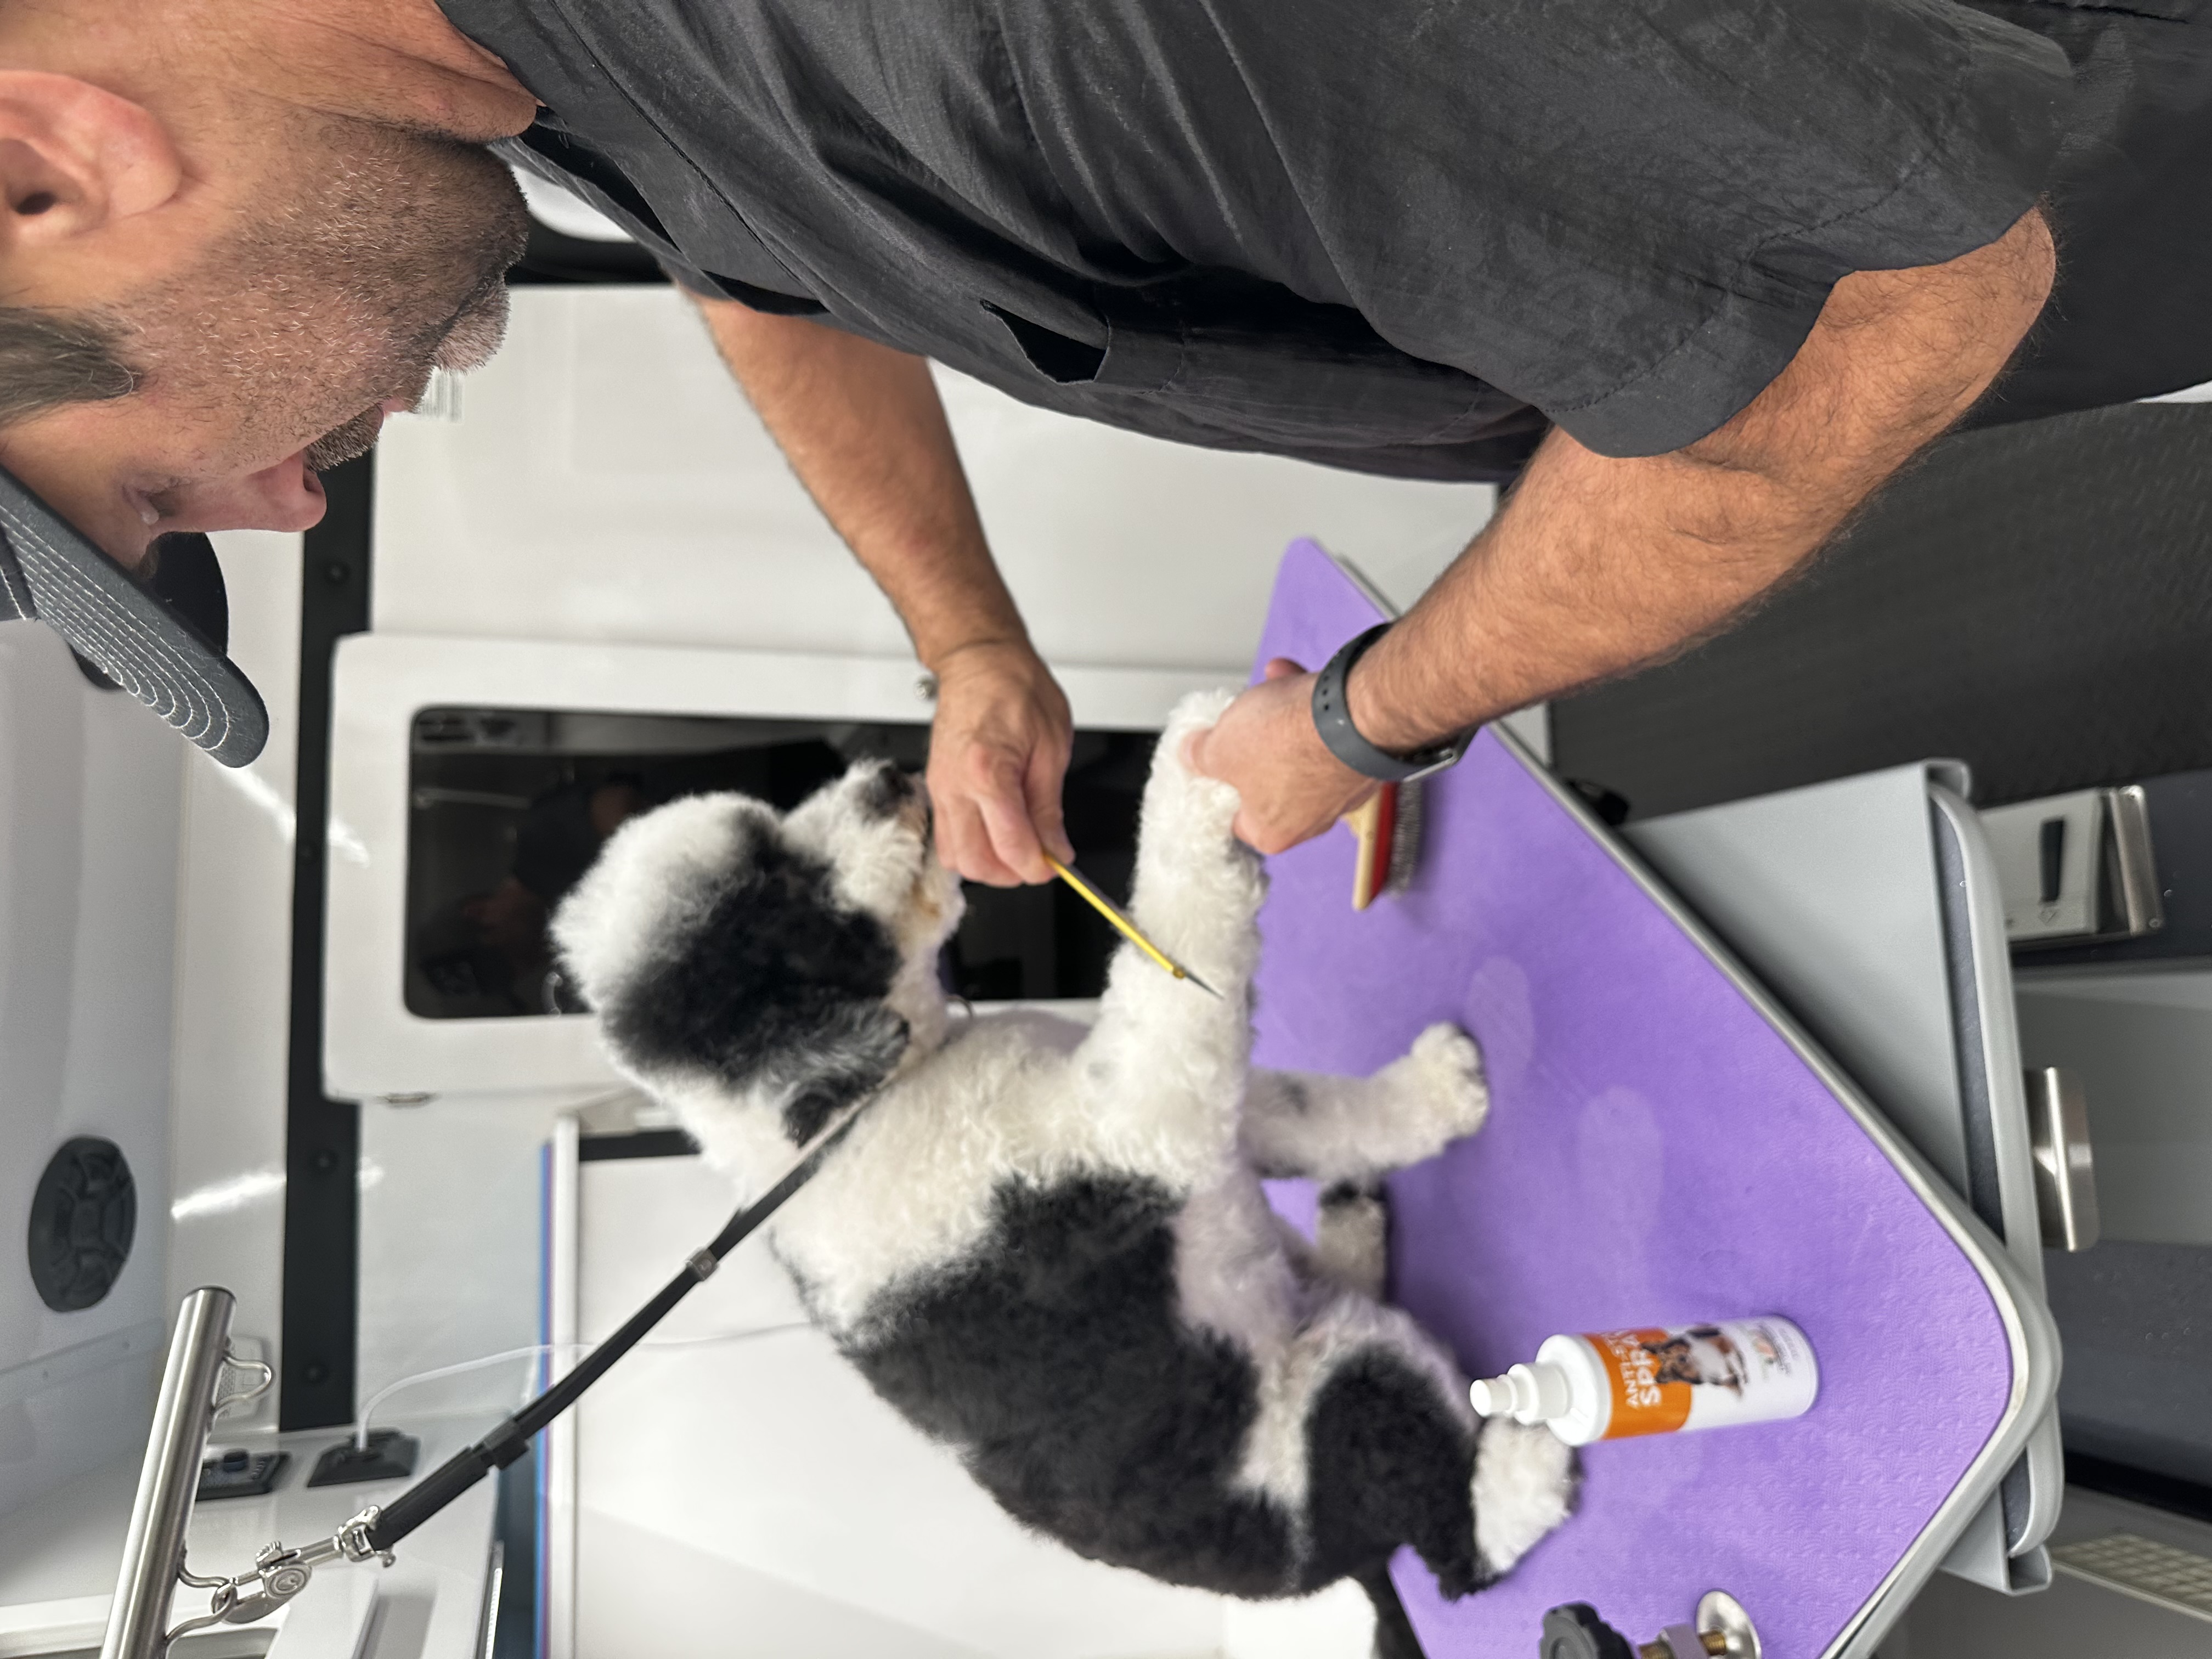 Jay grooming cute dog